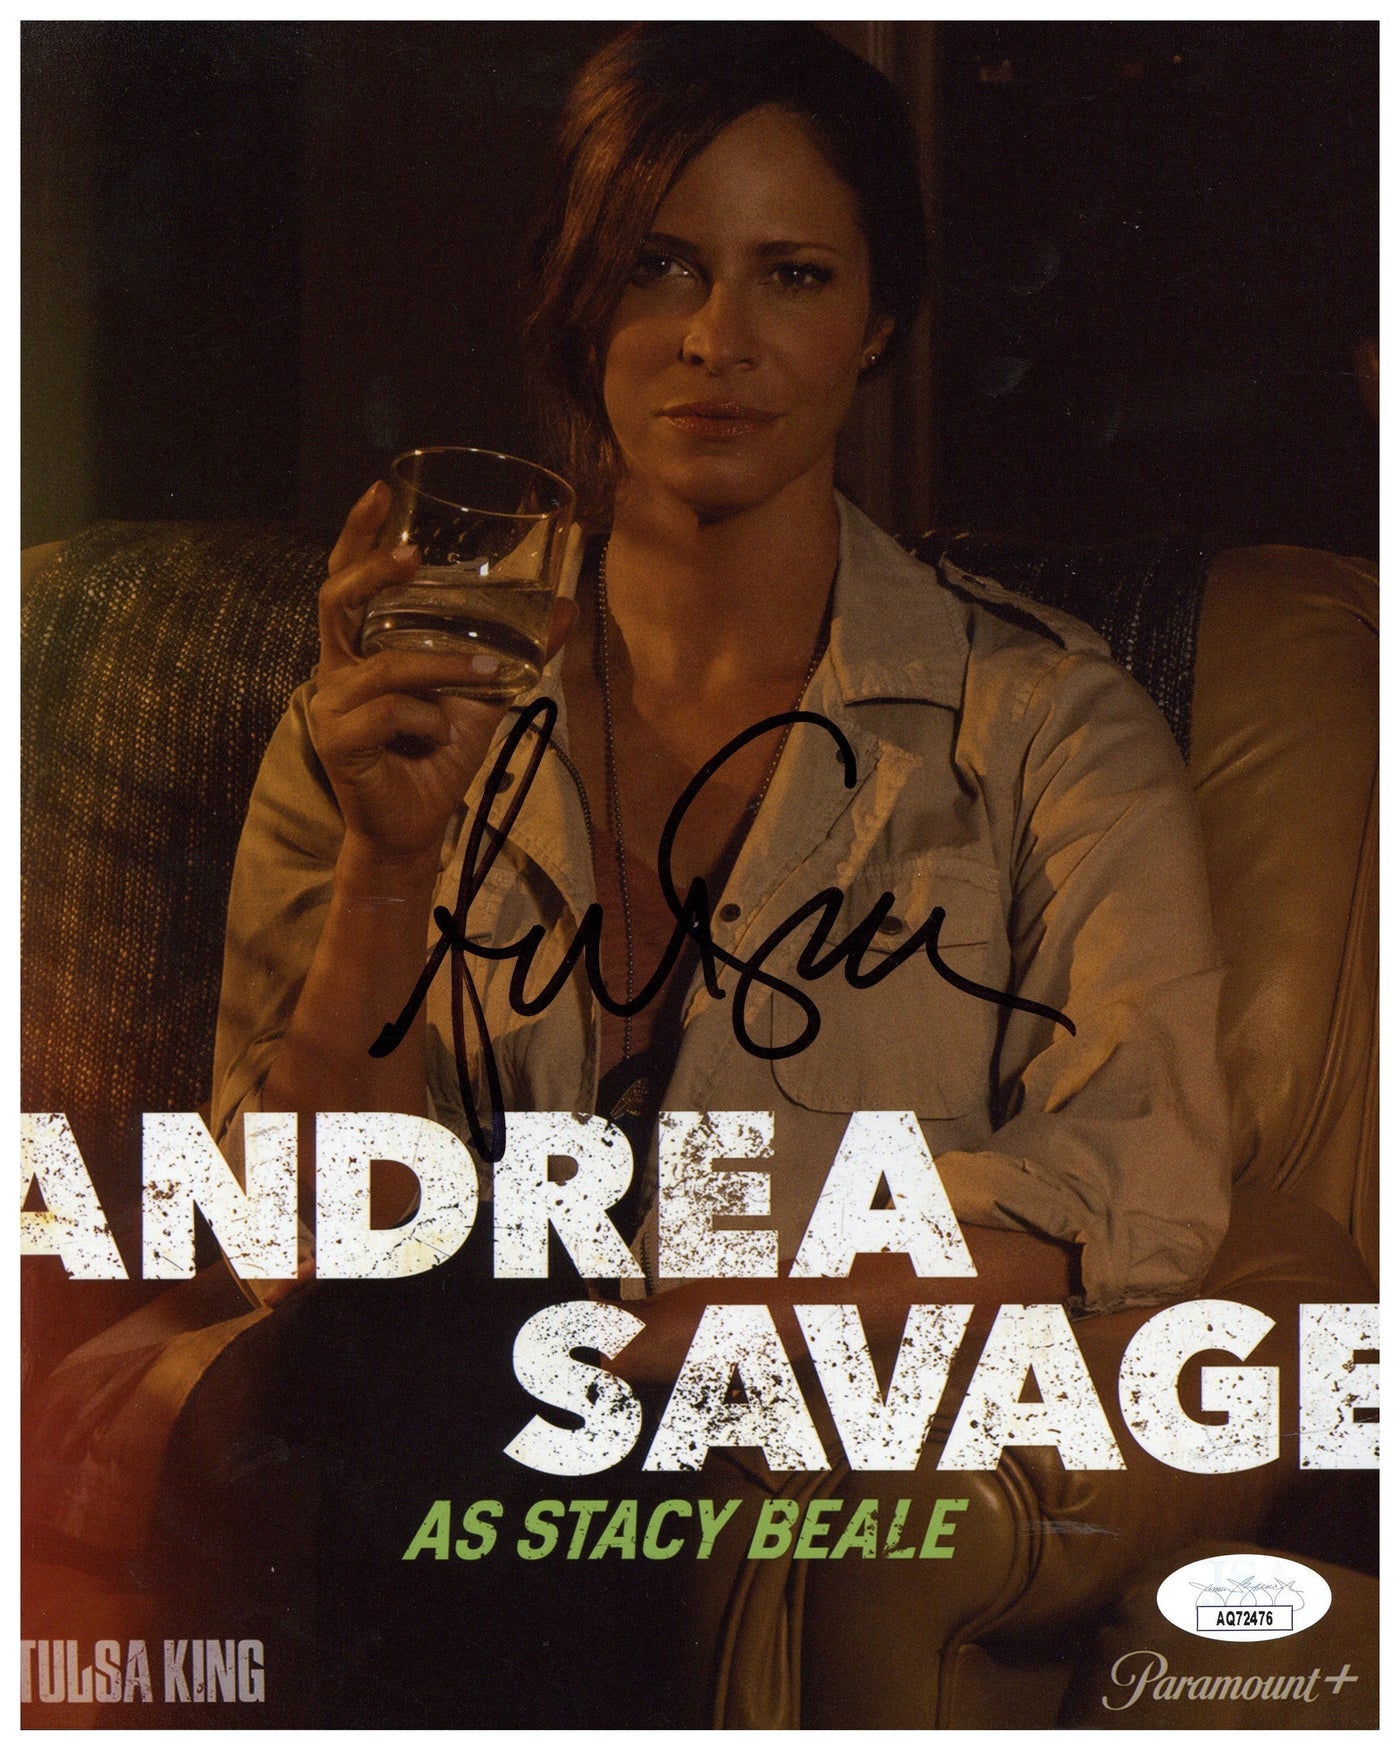 Andrea Savage Signed 8x10 Photo Tulsa King Autographed JSA COA #2